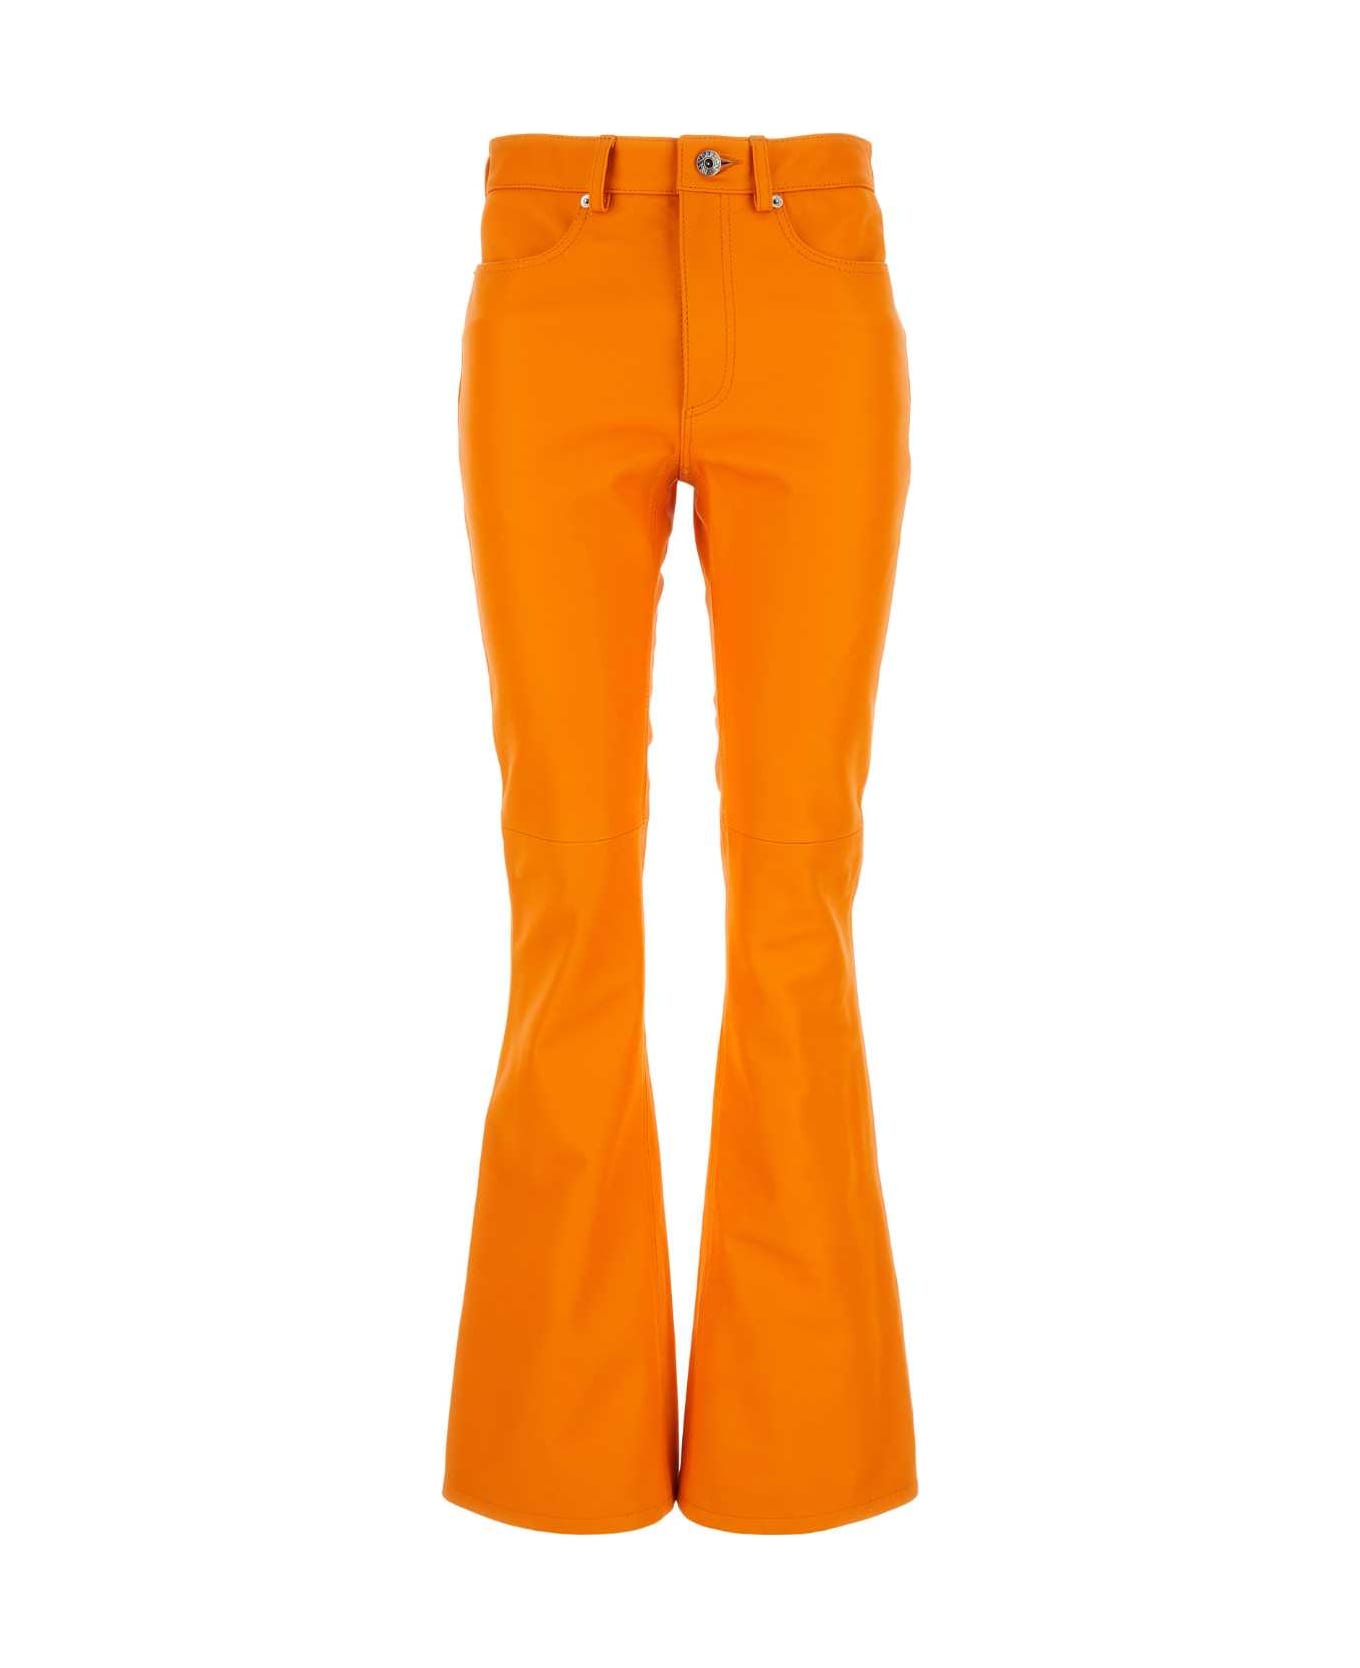 J.W. Anderson Orange Leather Pant - Orange